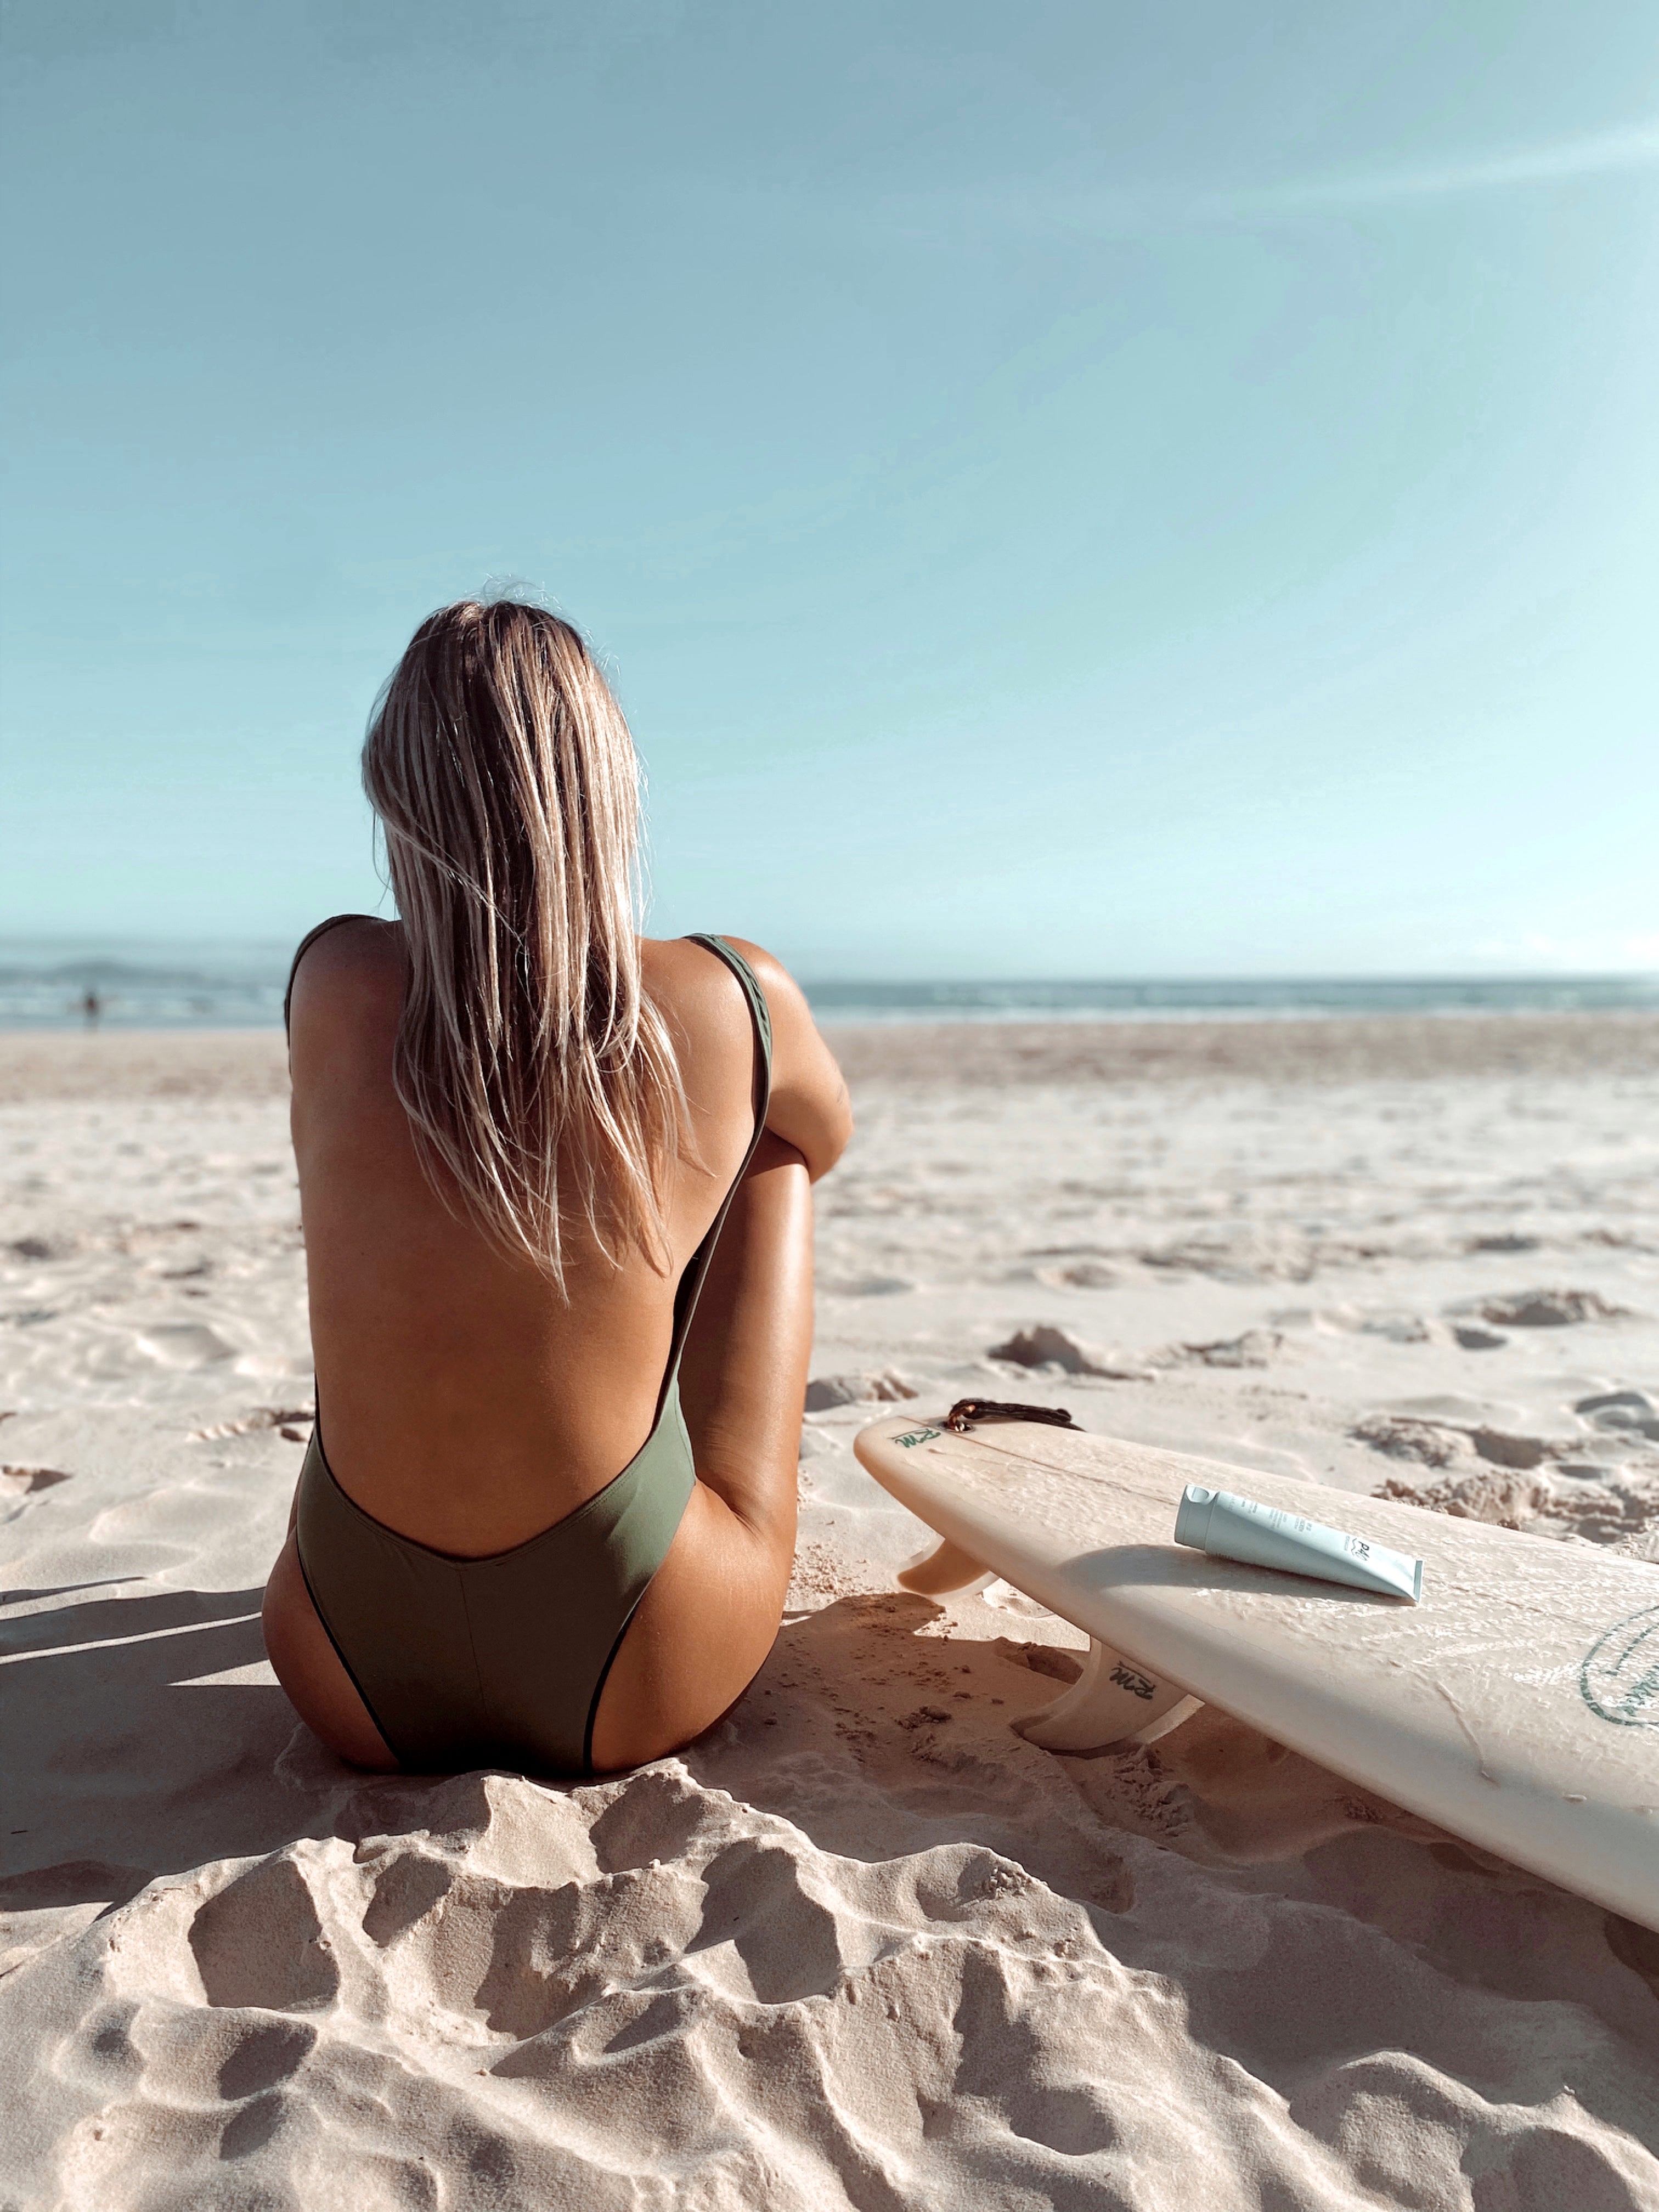 5 Reasons to Use Reef Friendly Sunscreen – People4Ocean